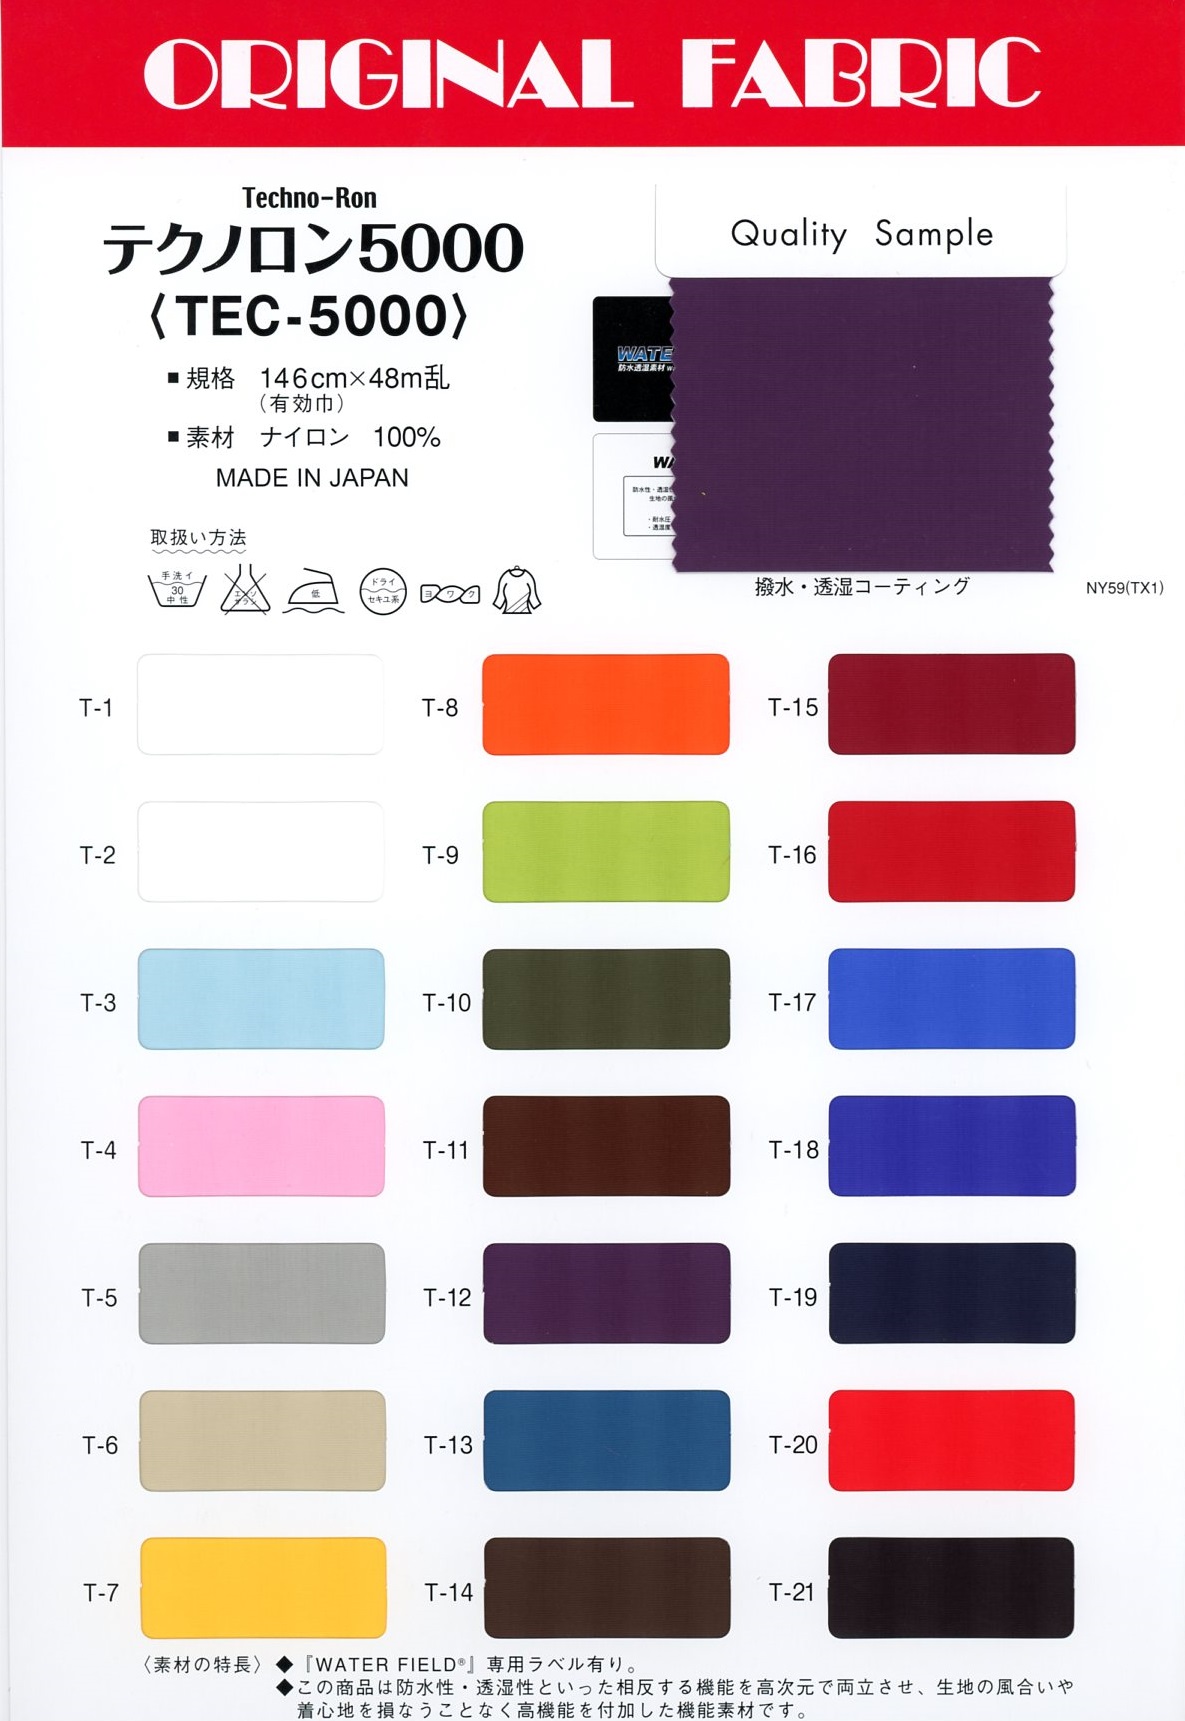 TEC-5000 Technoron 5000[Textile / Fabric] Masuda